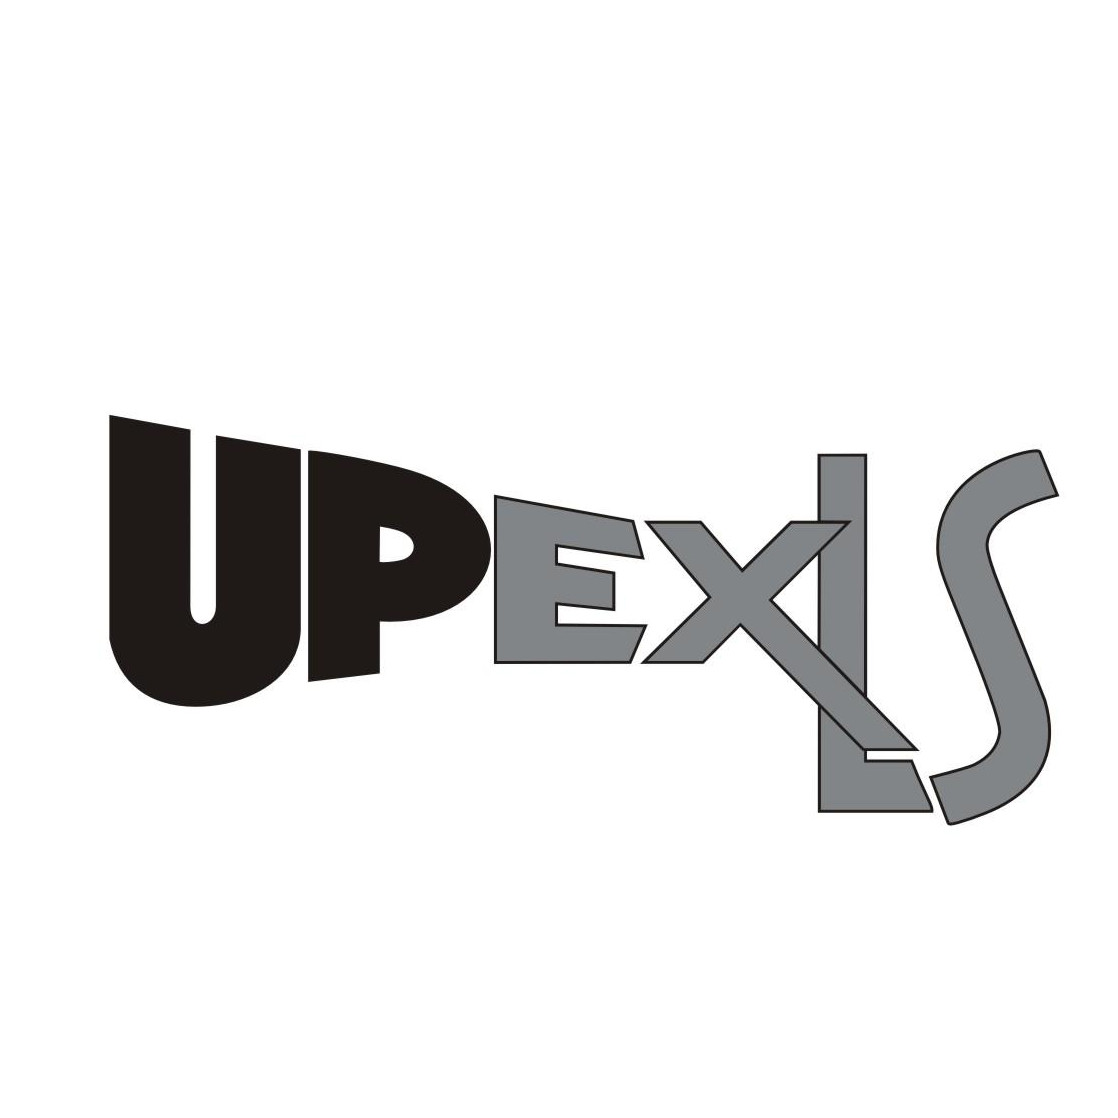 UPEX LS OÜ logo